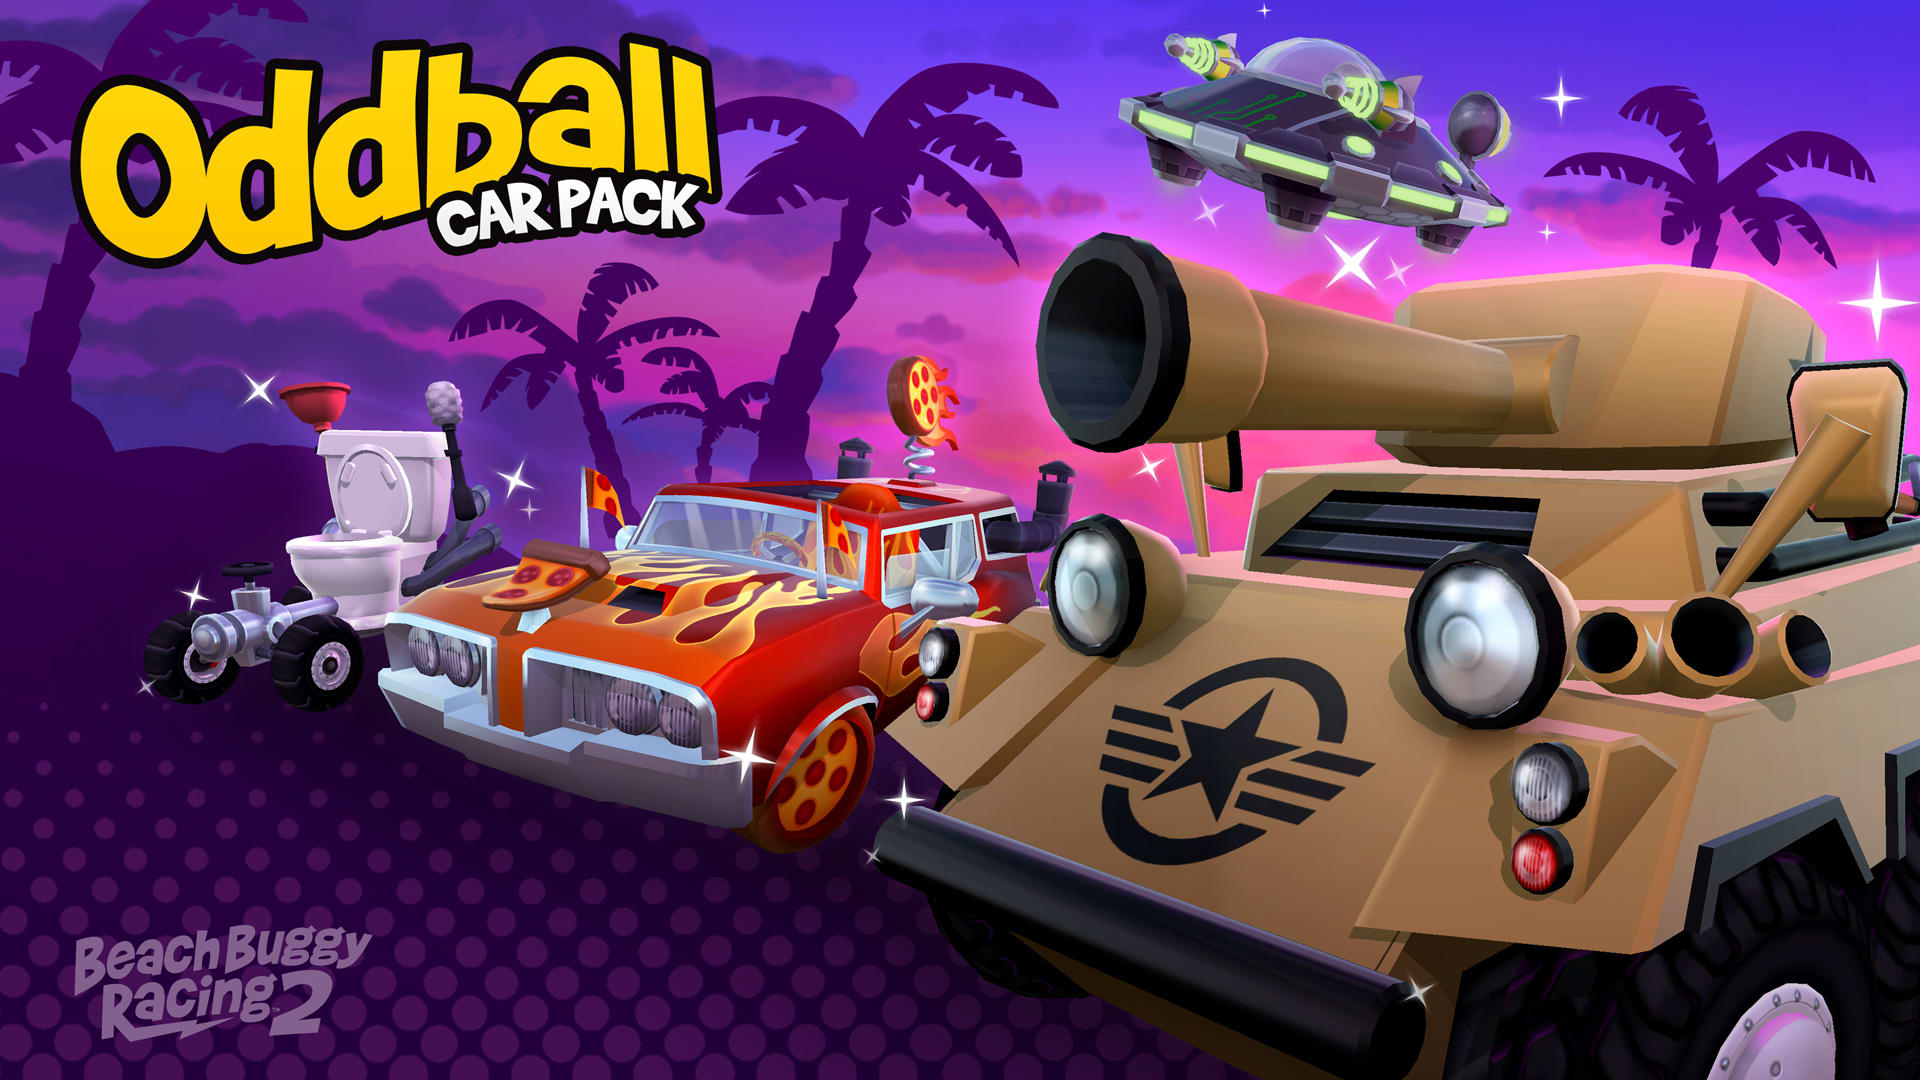 Oddball Car Pack 1